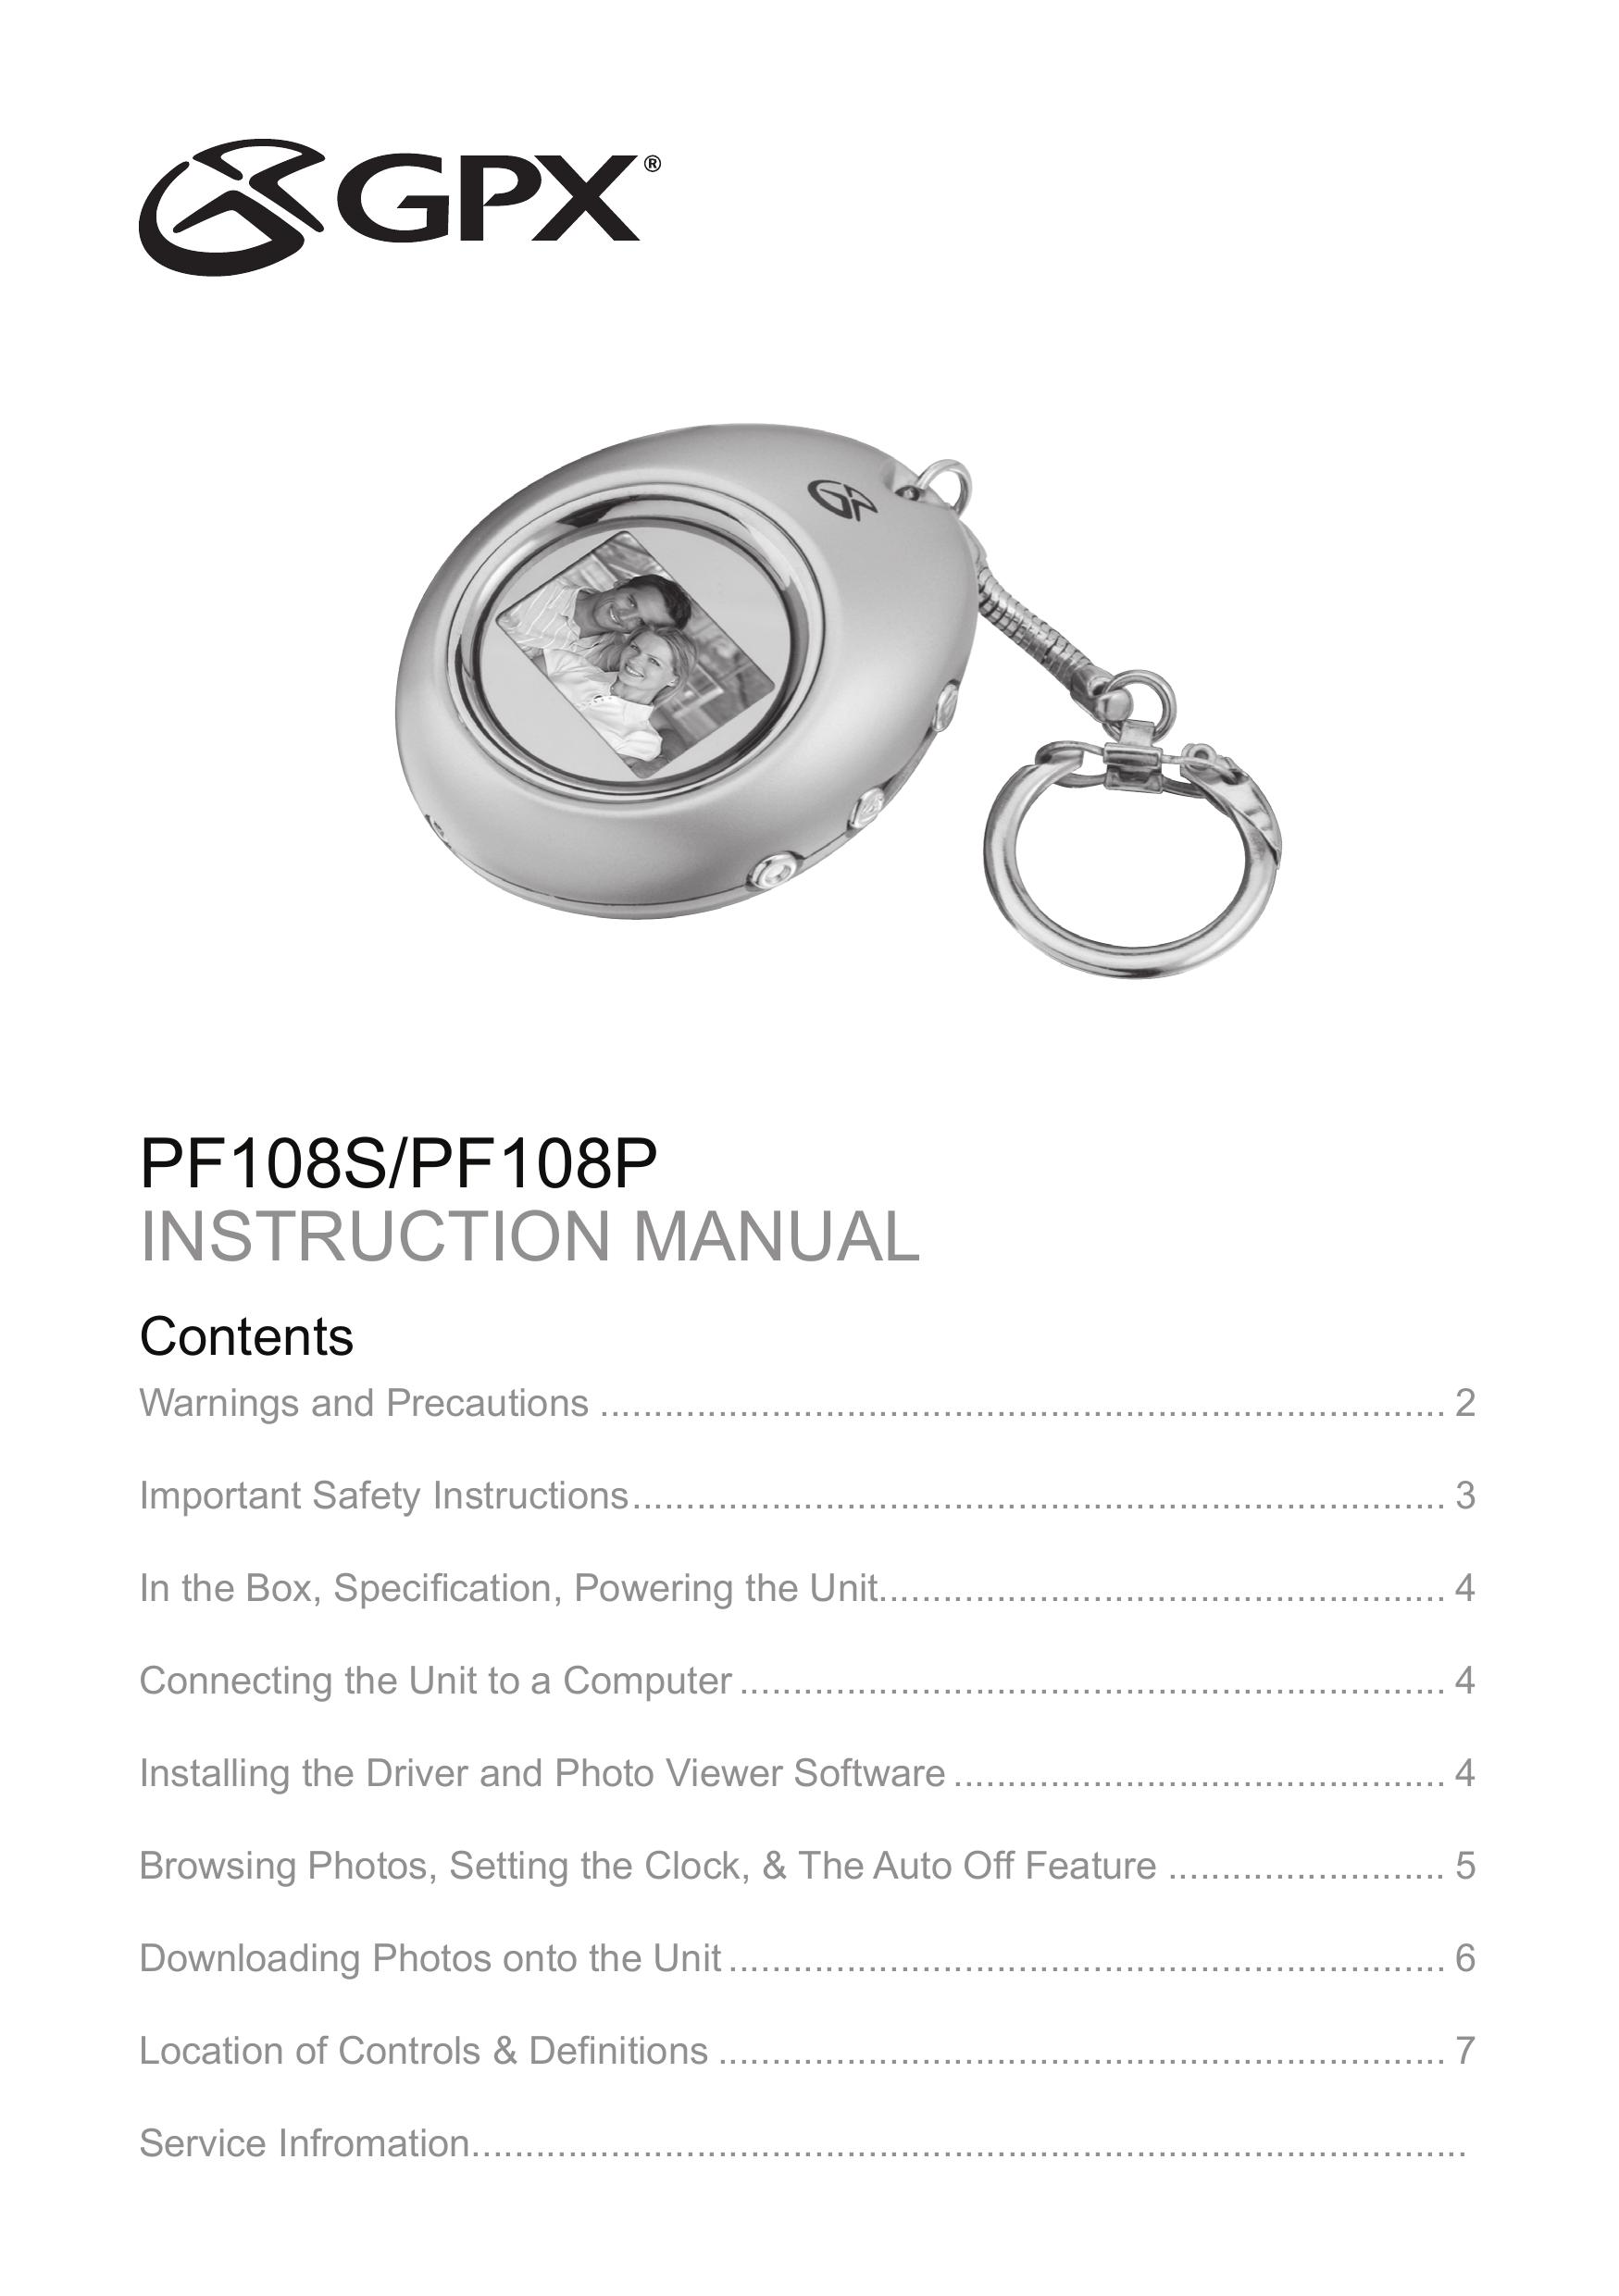 GPX PF108P Digital Photo Frame User Manual